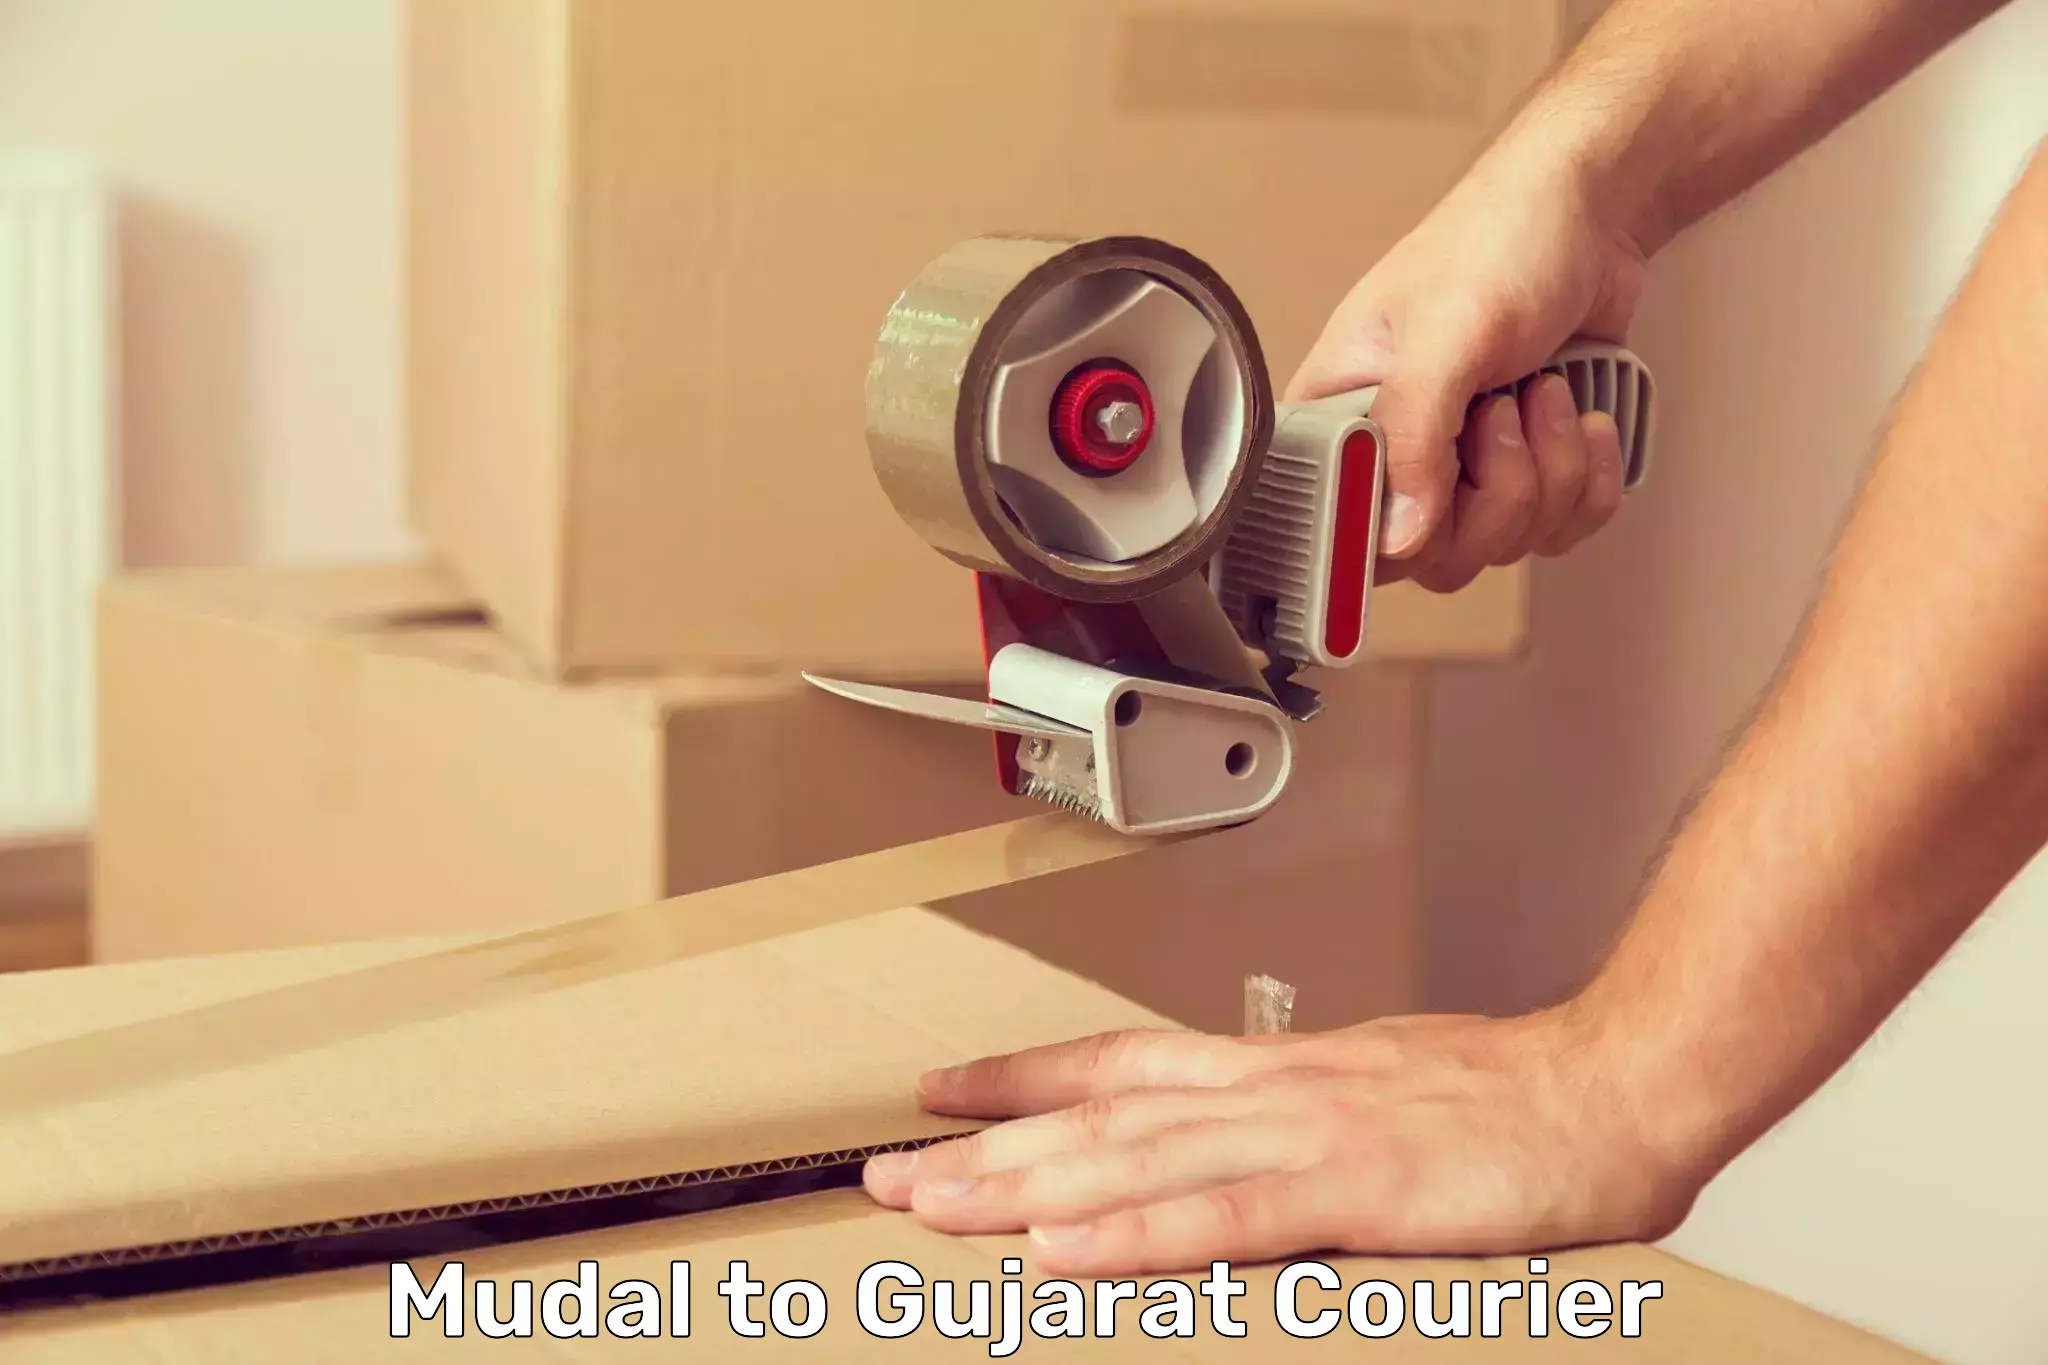 Speedy delivery service Mudal to Gujarat